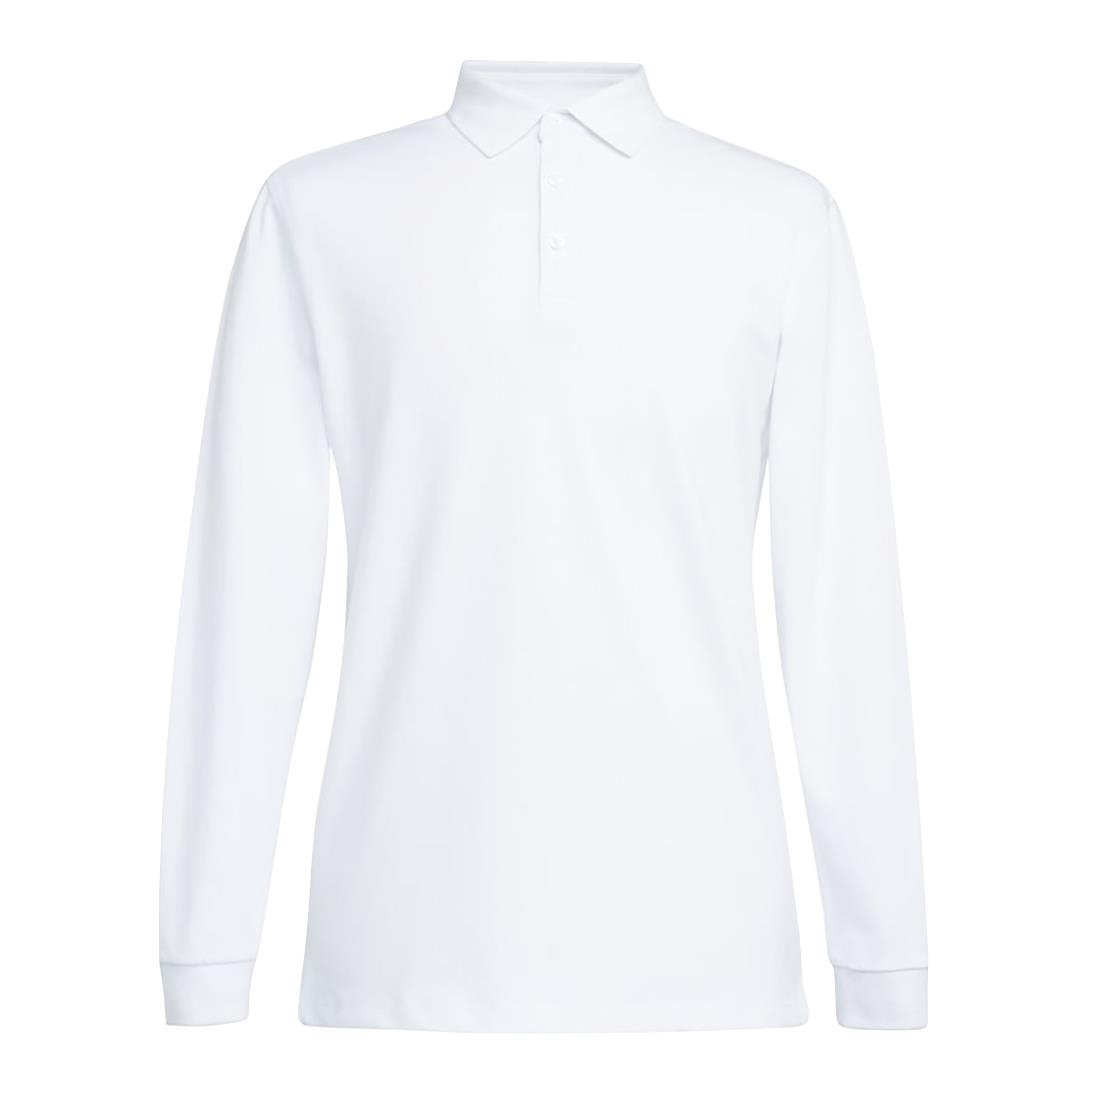 BA140-S Brook Taverner Frederick Mens Long Sleeve Polo Shirt White Size S